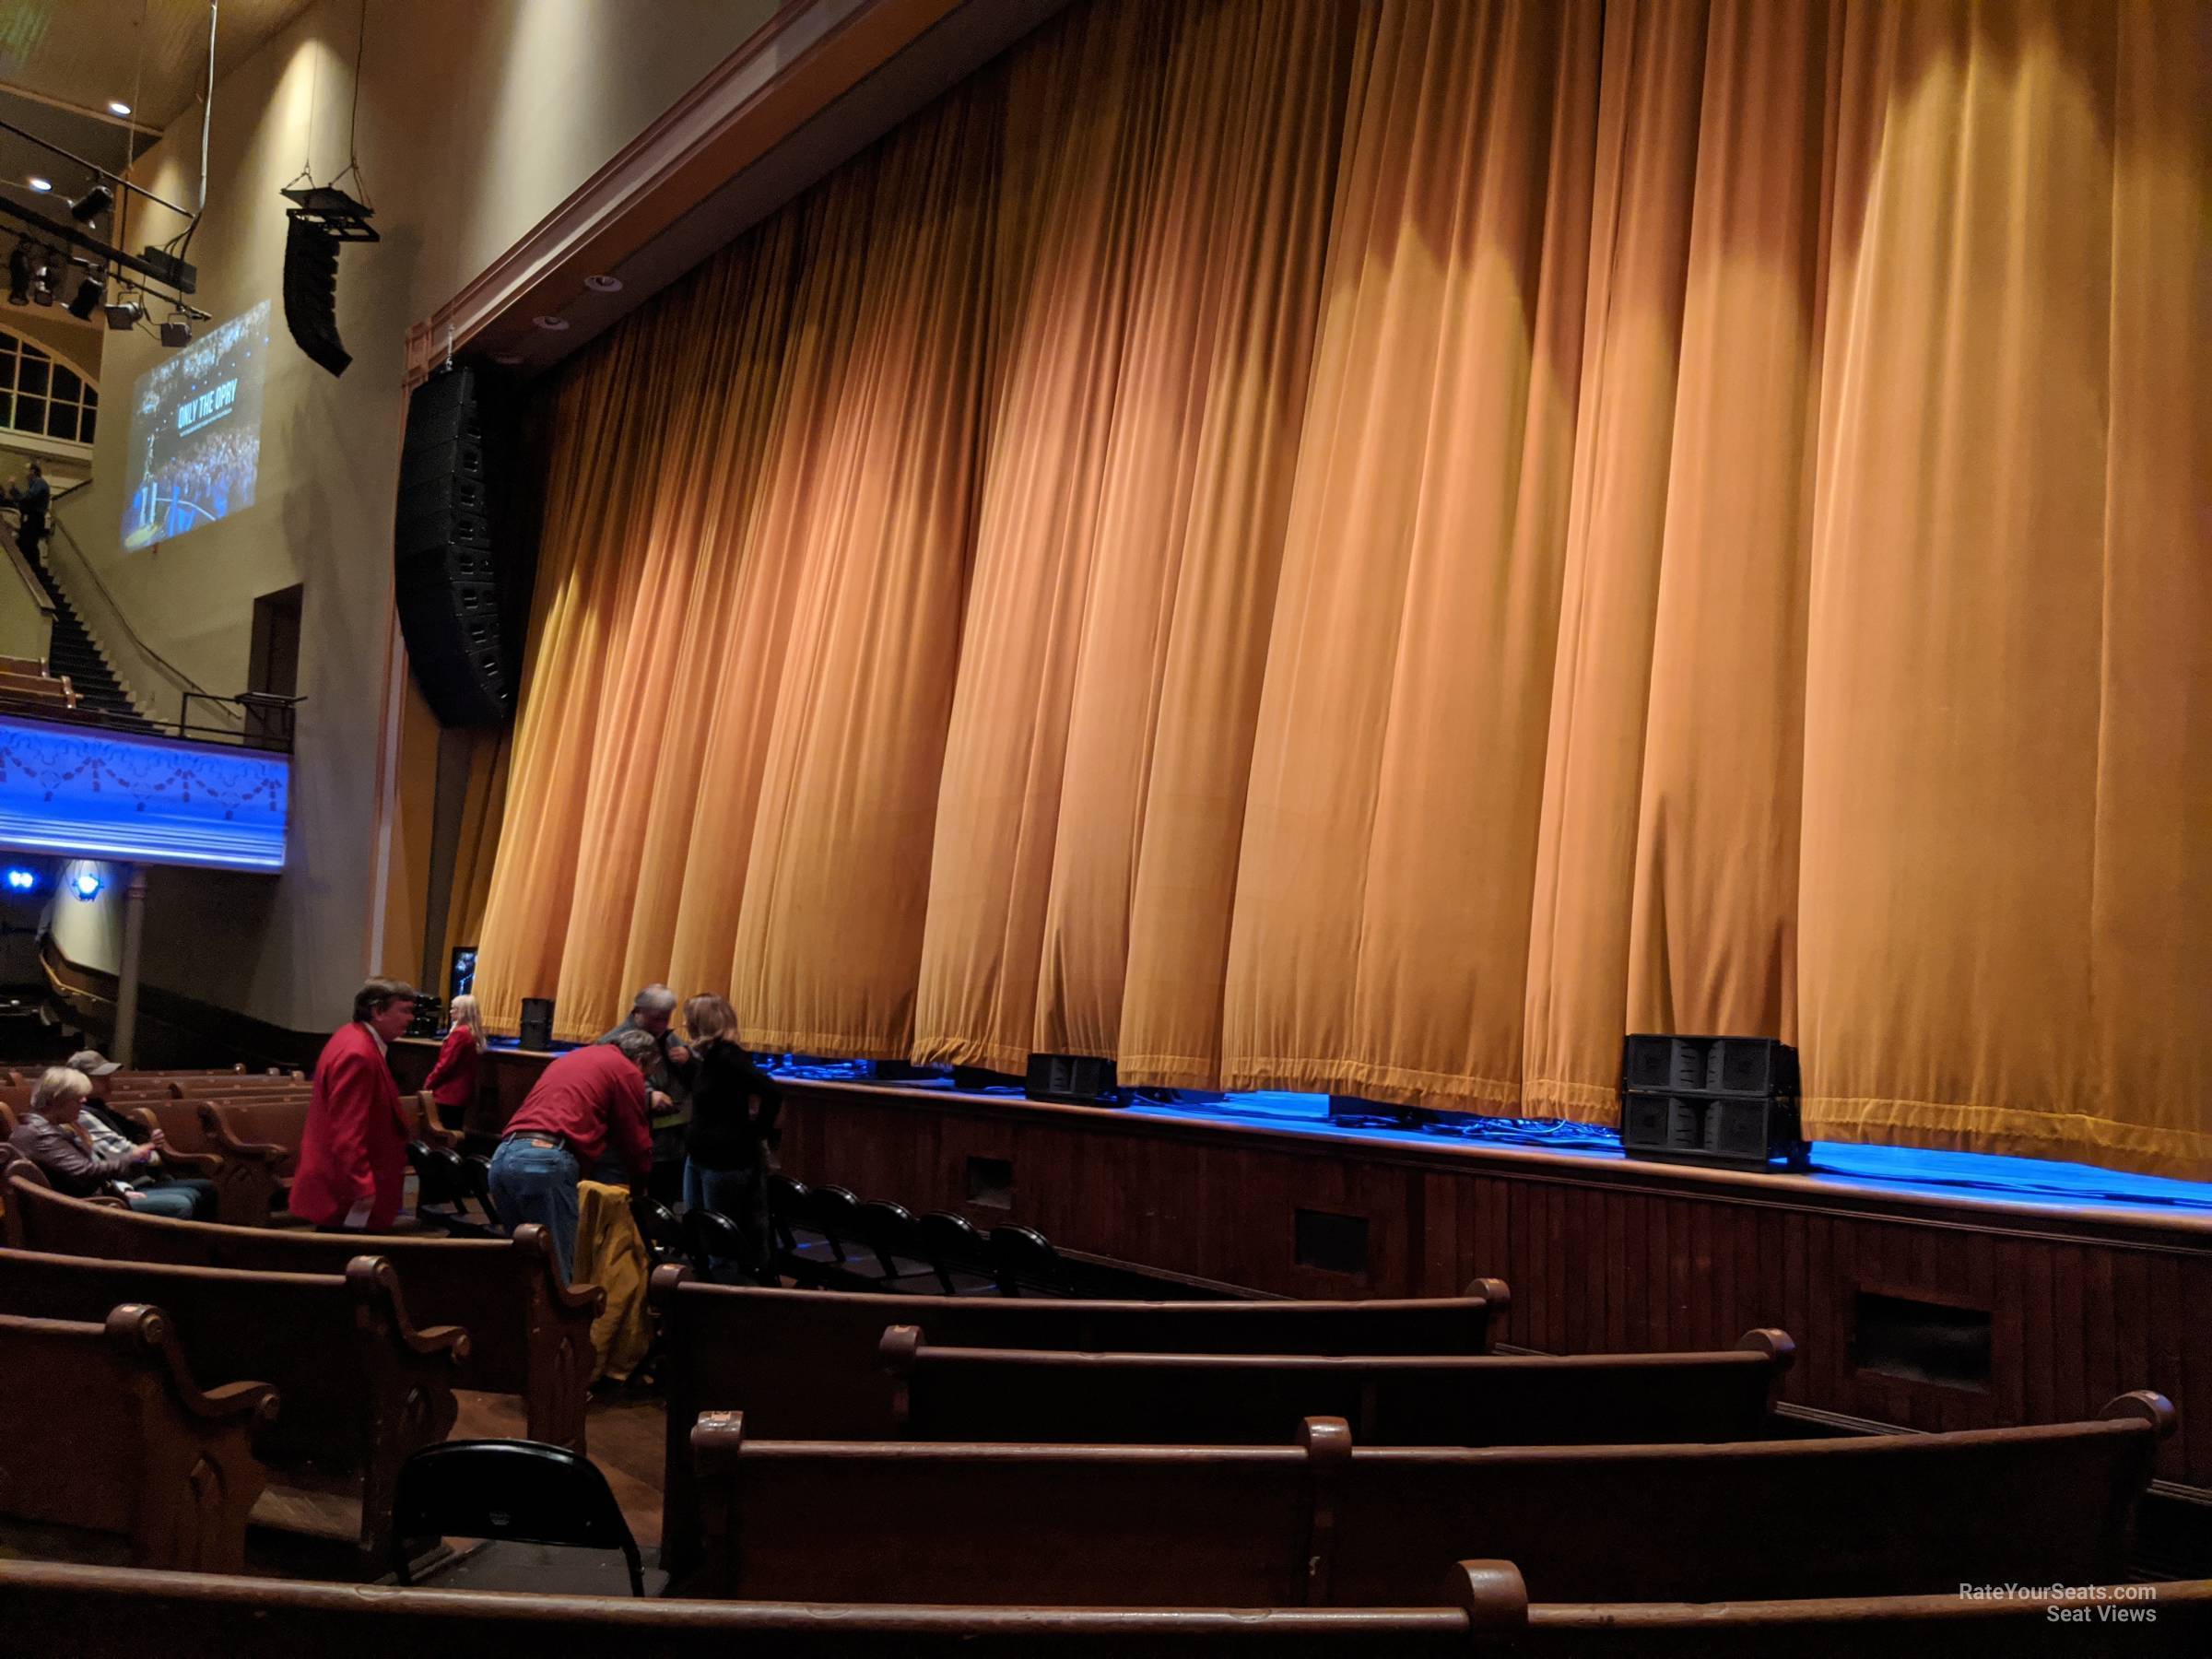 Section 1 at Ryman Auditorium - RateYourSeats.com